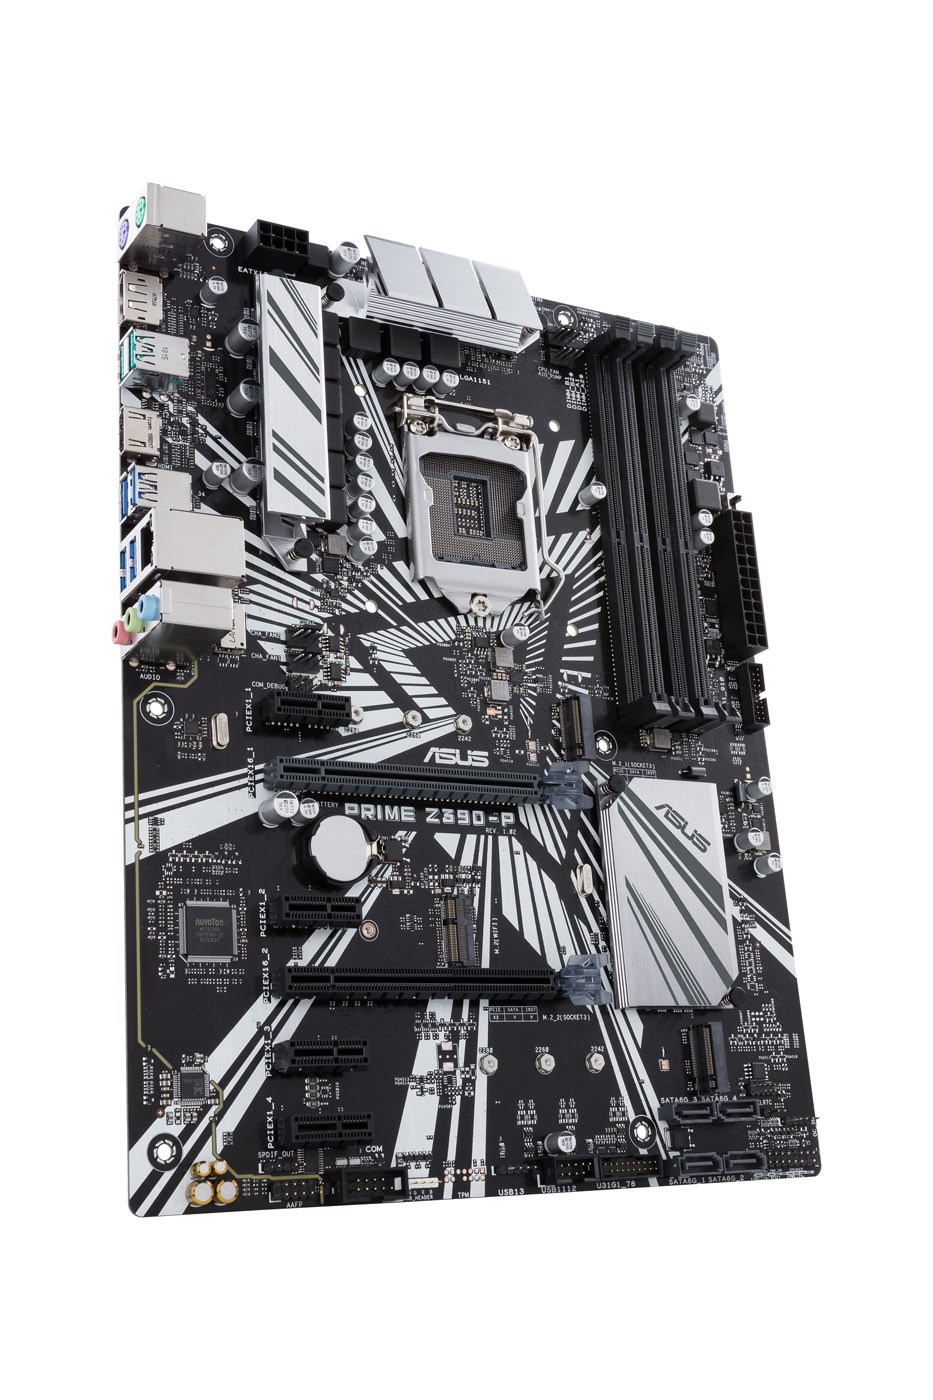 Asus Prime Z390 P Intel Socket 1151 Motherboard 90mb0xx0 M0eay0 Ccl